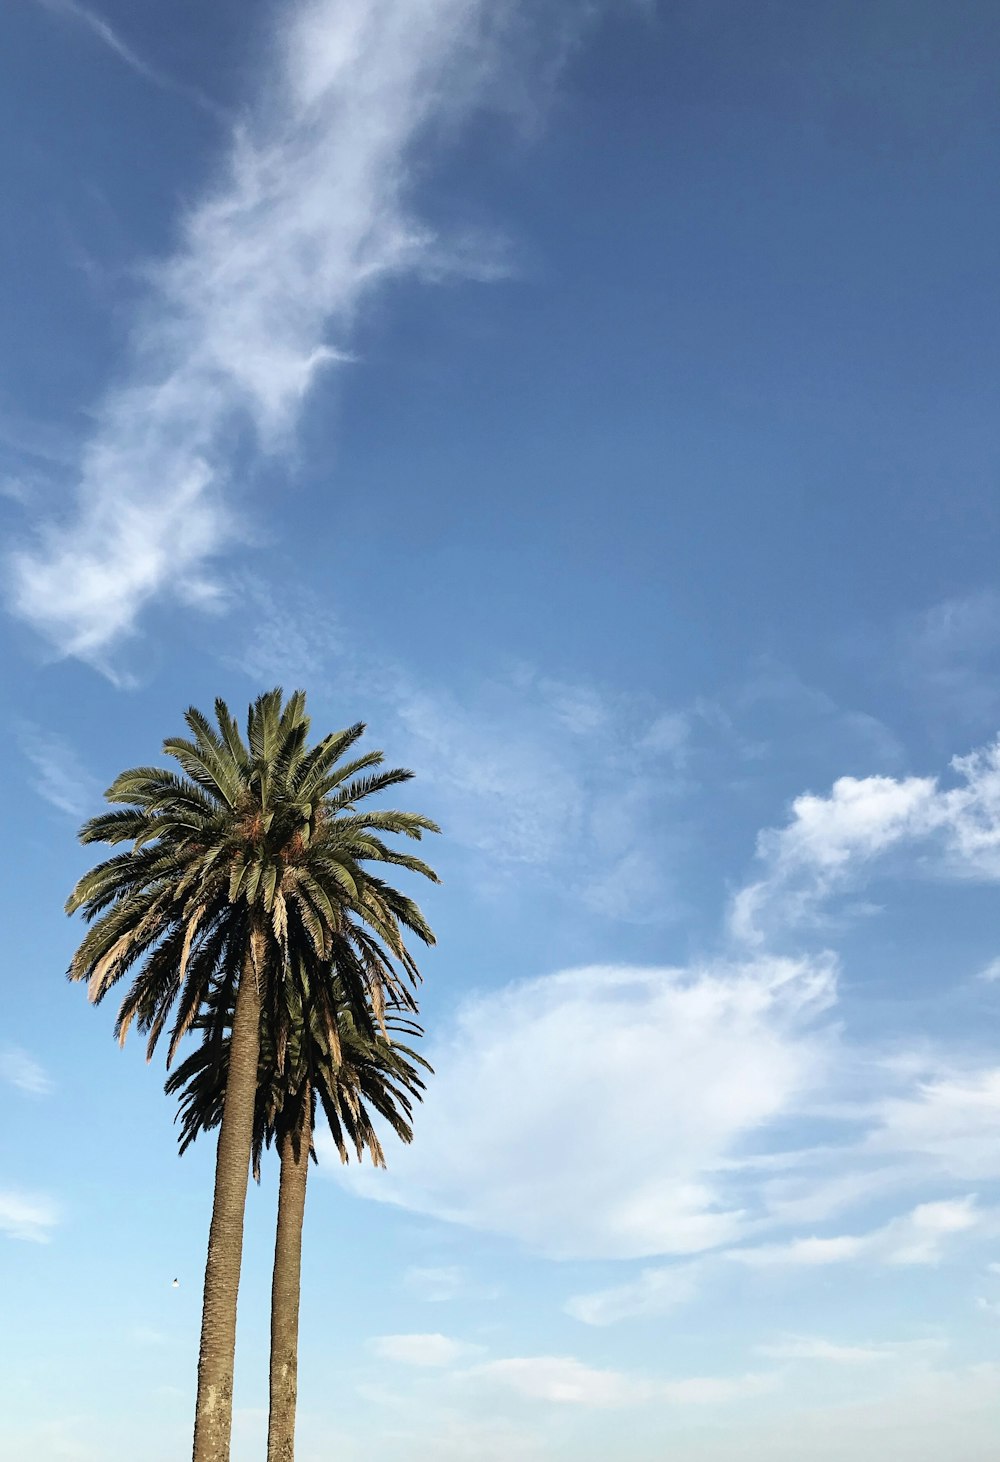 a palm tree under a blue sky